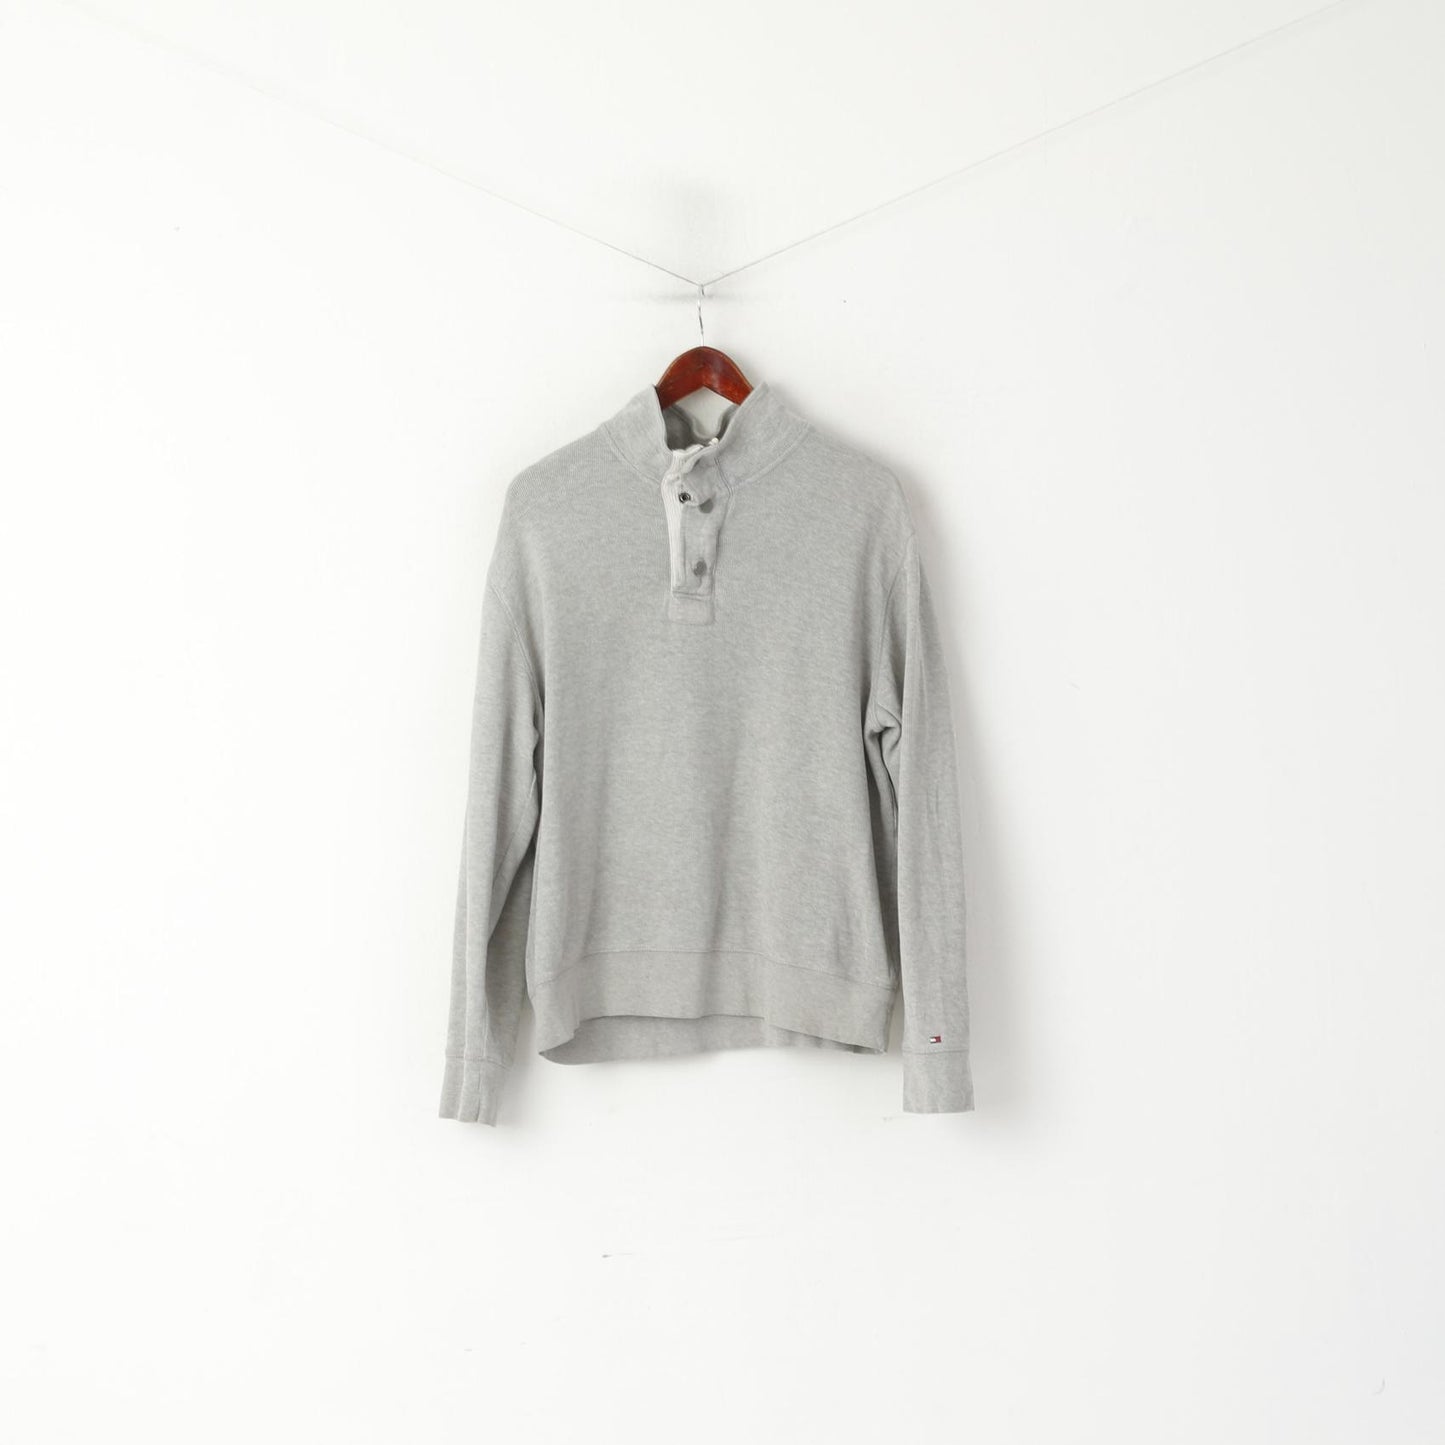 Tommy Hilfiger Men L Sweatshirt Gray Cotton Zip Neck Striped Stretch Plain Top